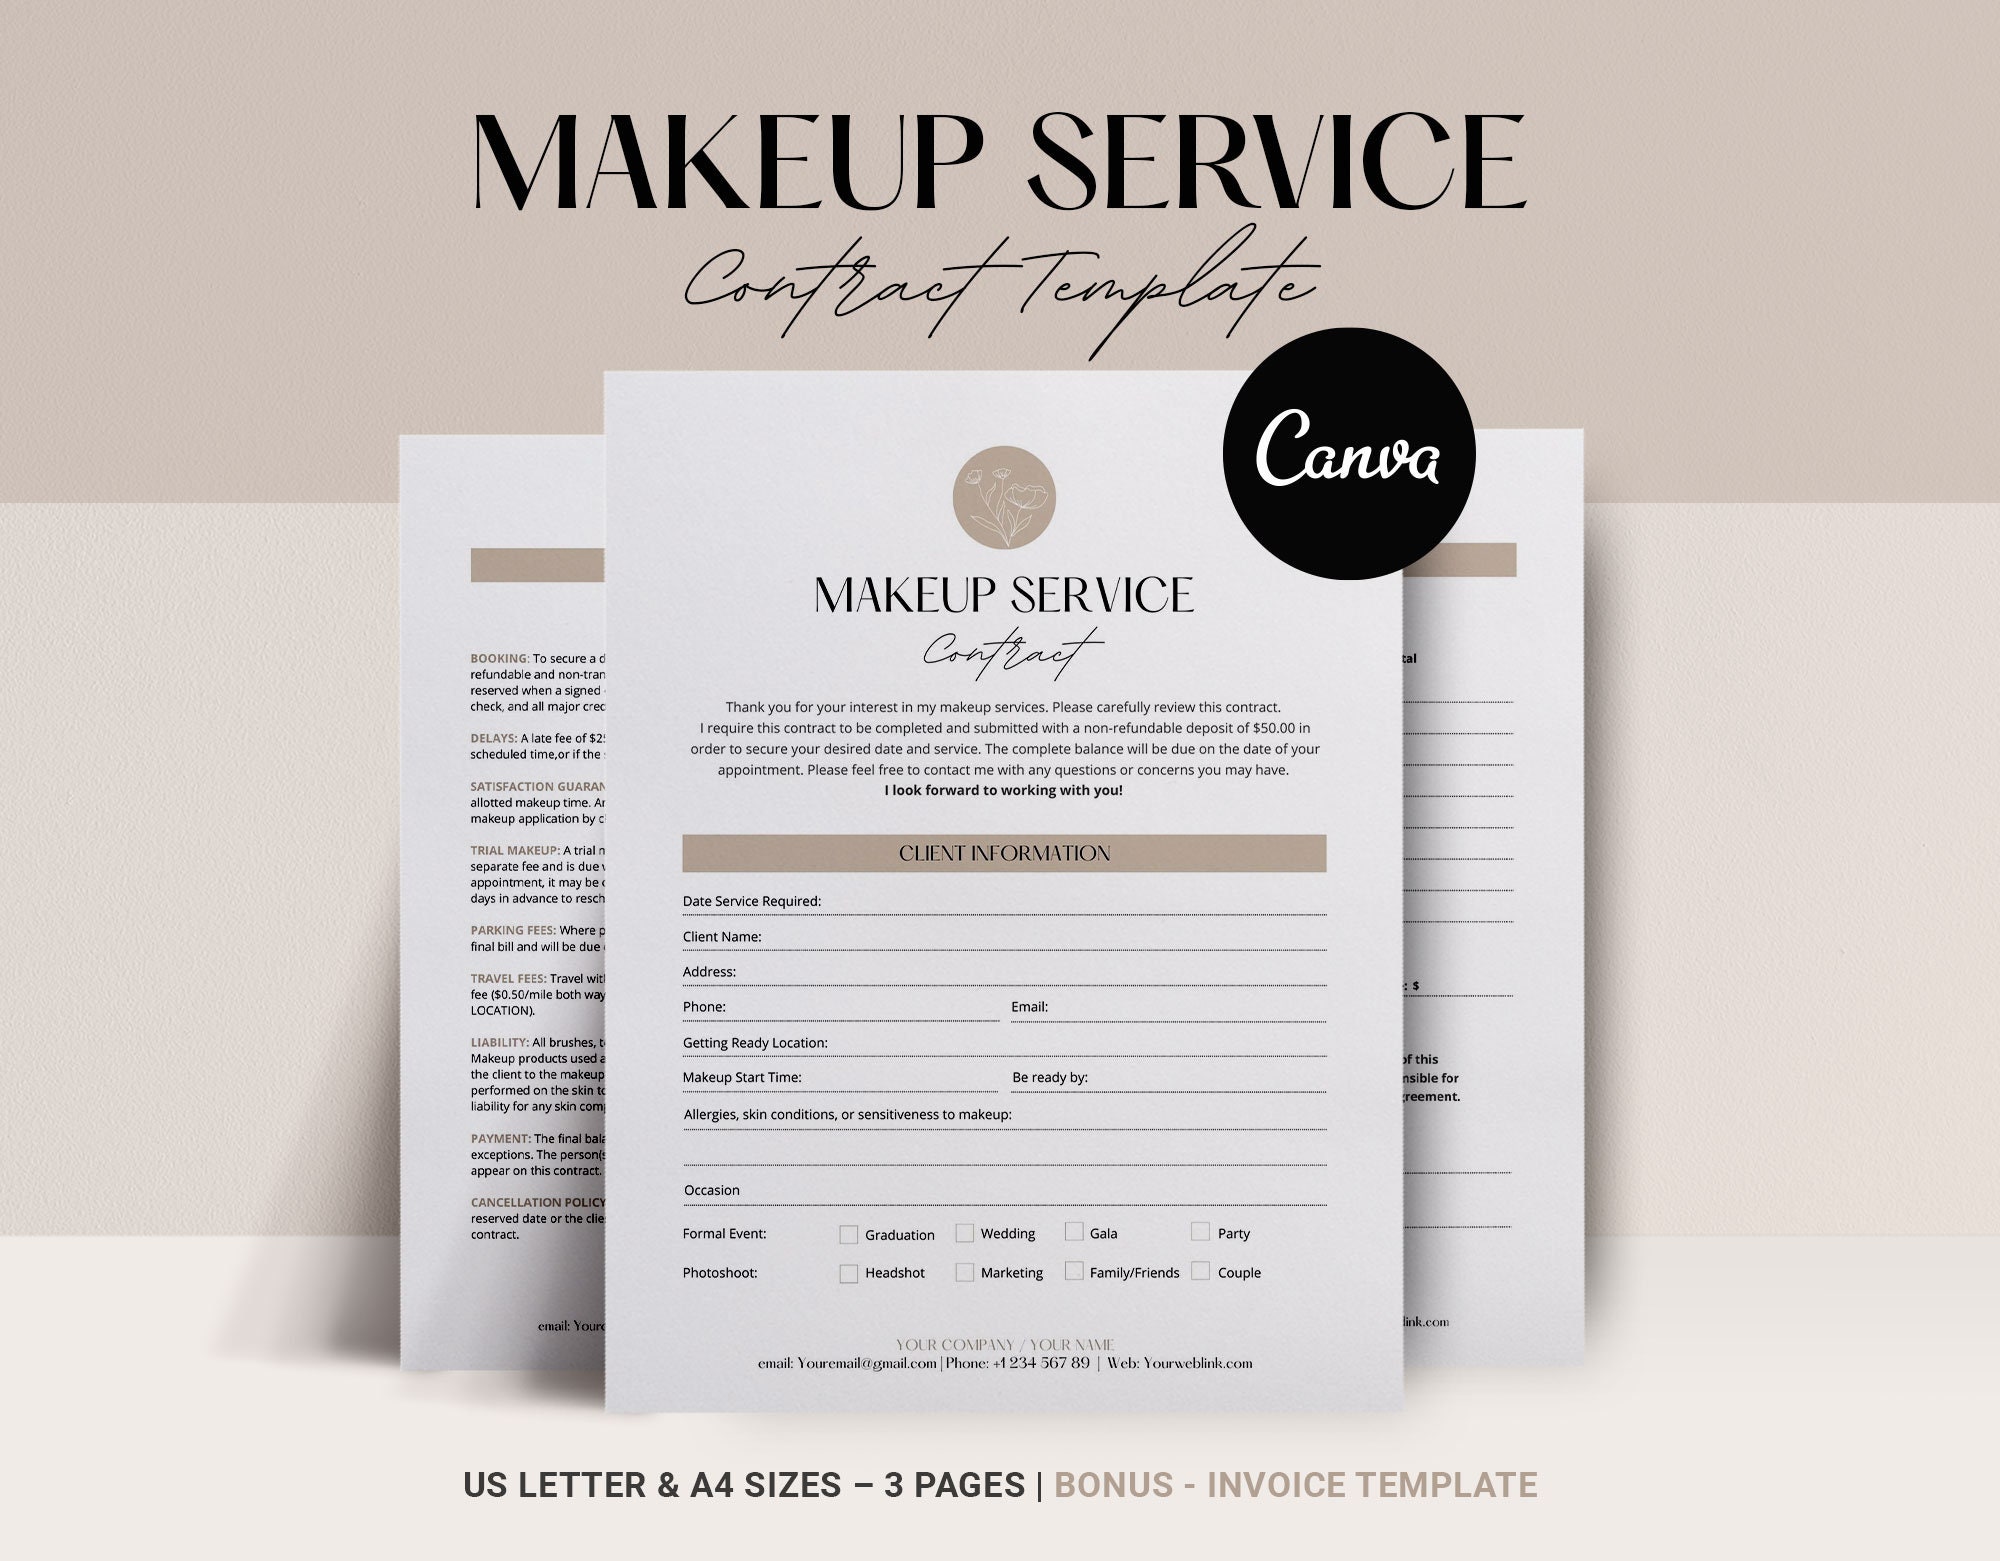 Makeup Artist Templates, Makeup Artist Practice Sheets, Freelance